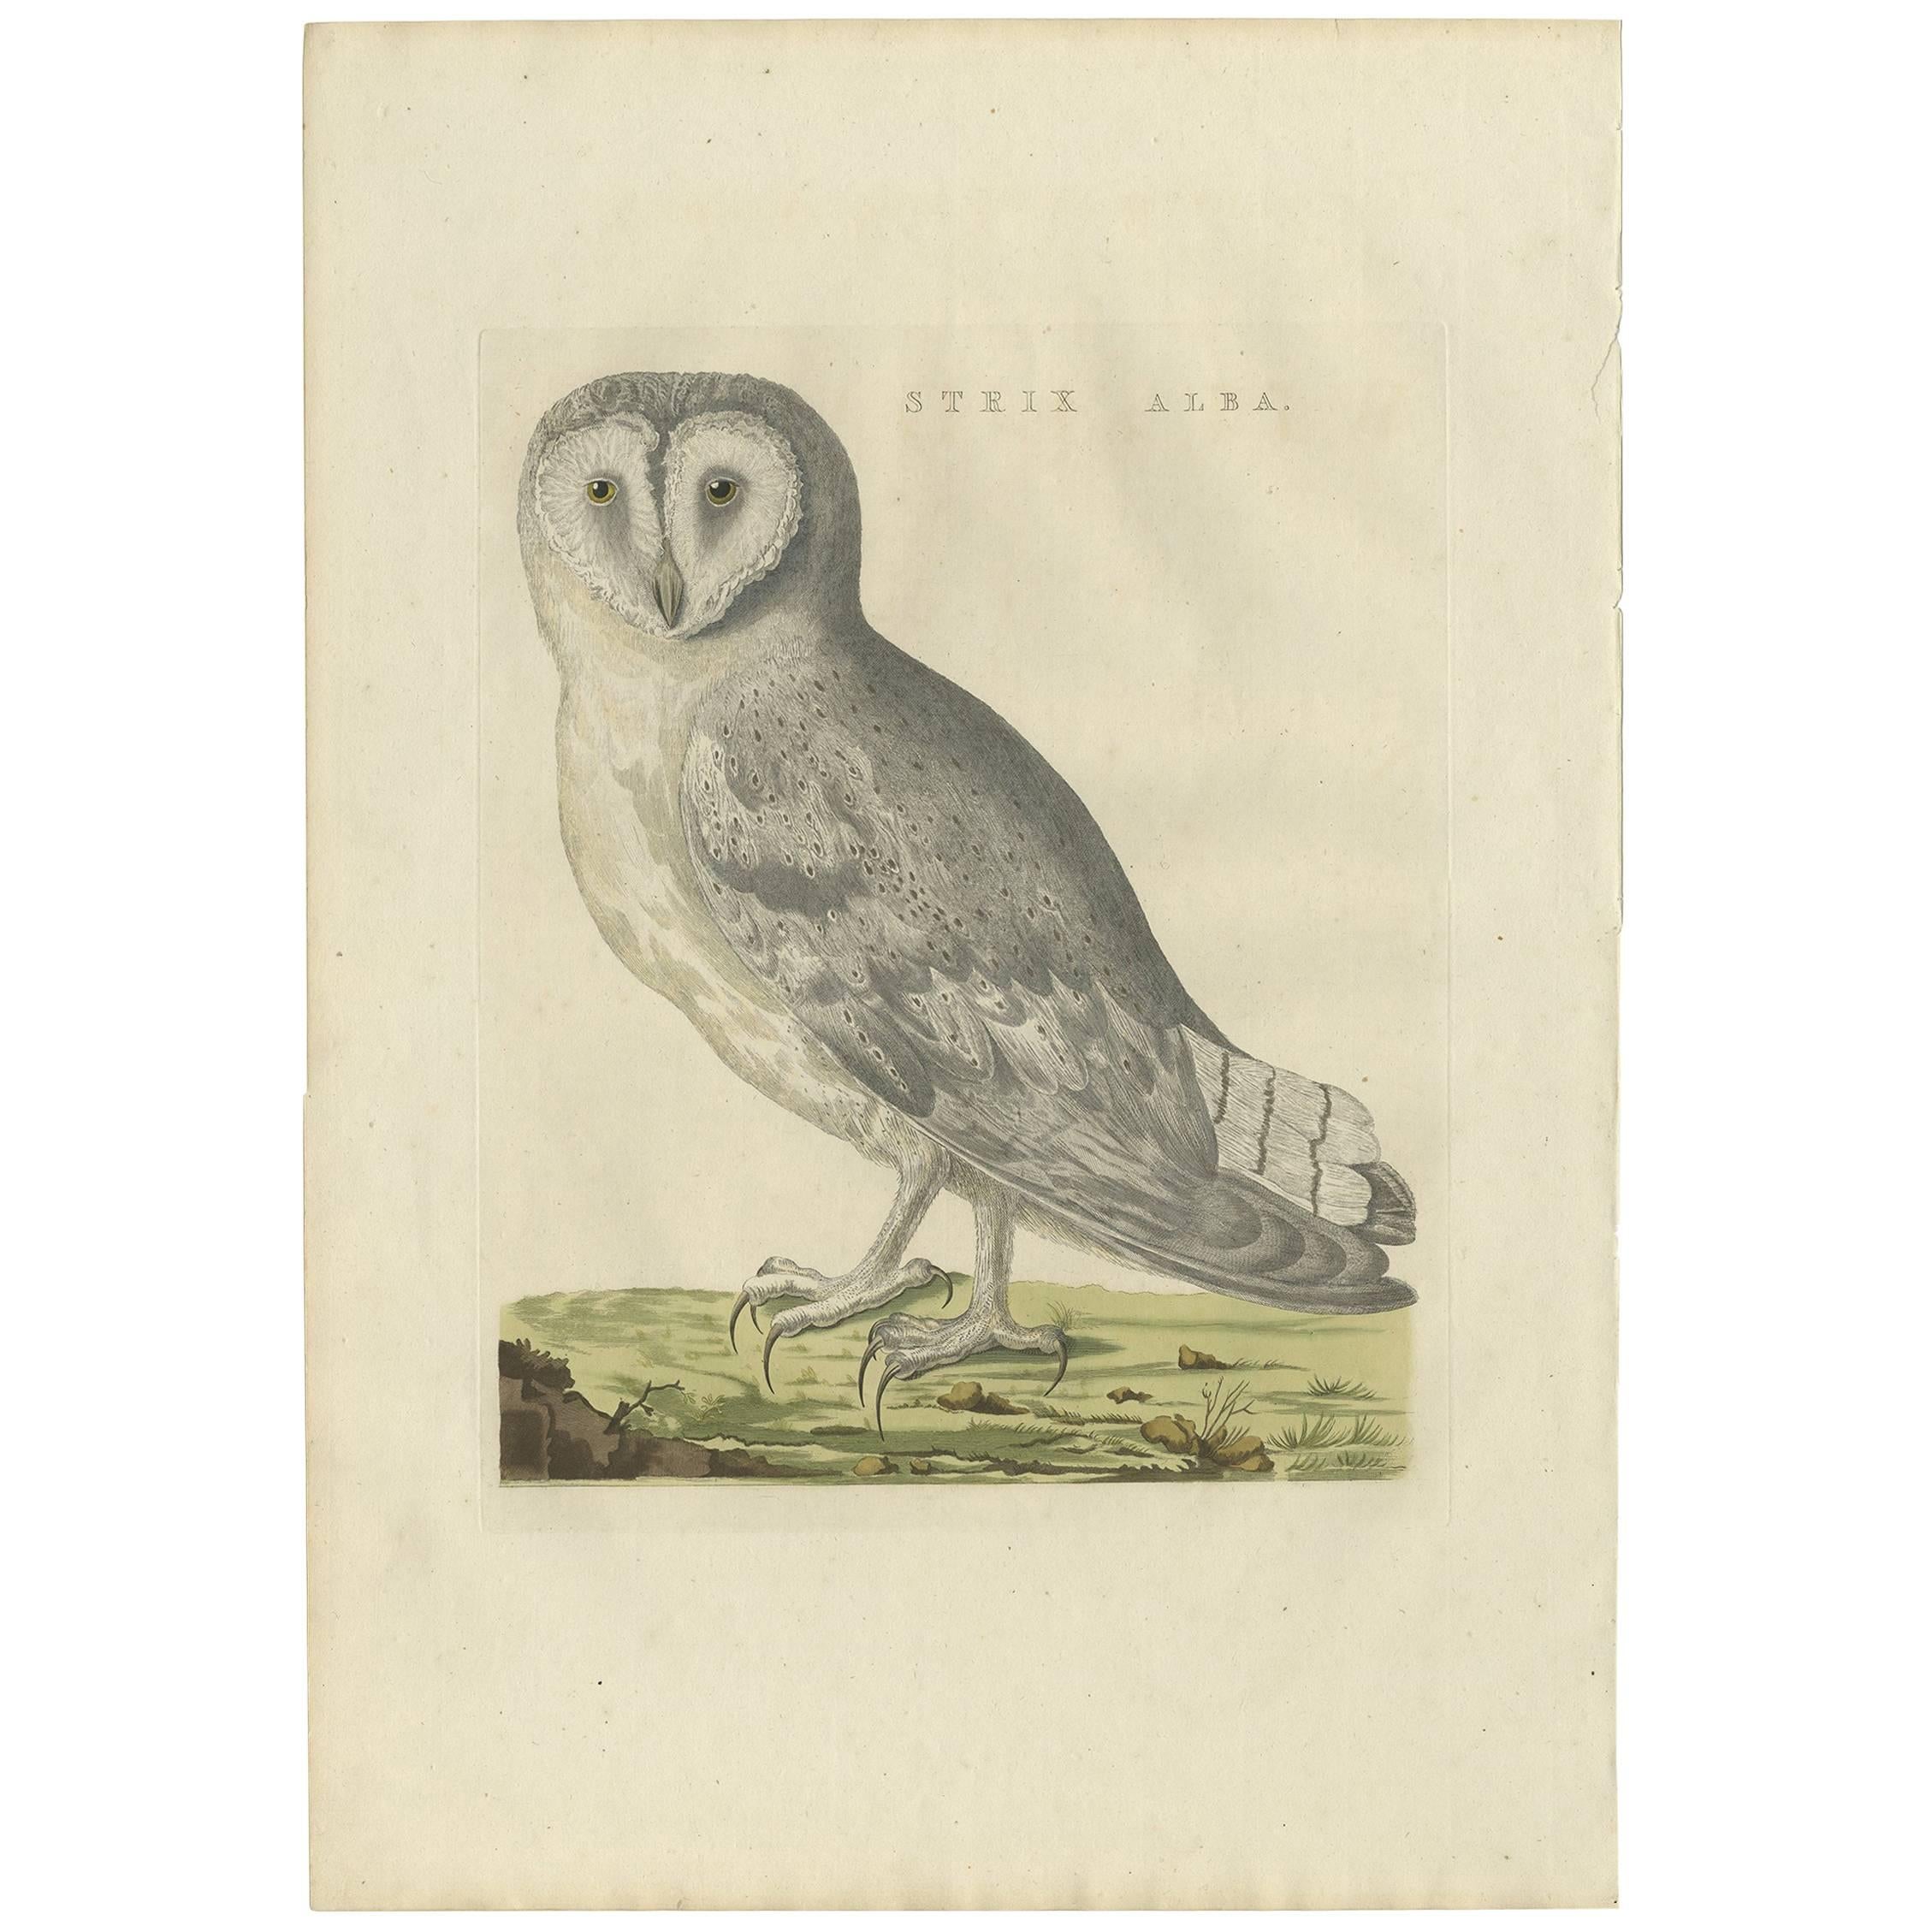 Antique Bird Print of a White Barn Owl by Sepp & Nozeman, 1809